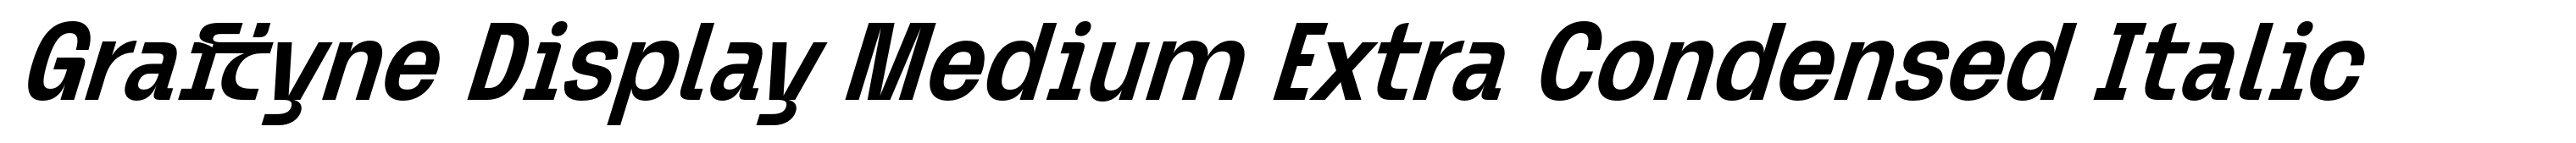 Graftyne Display Medium Extra Condensed Italic